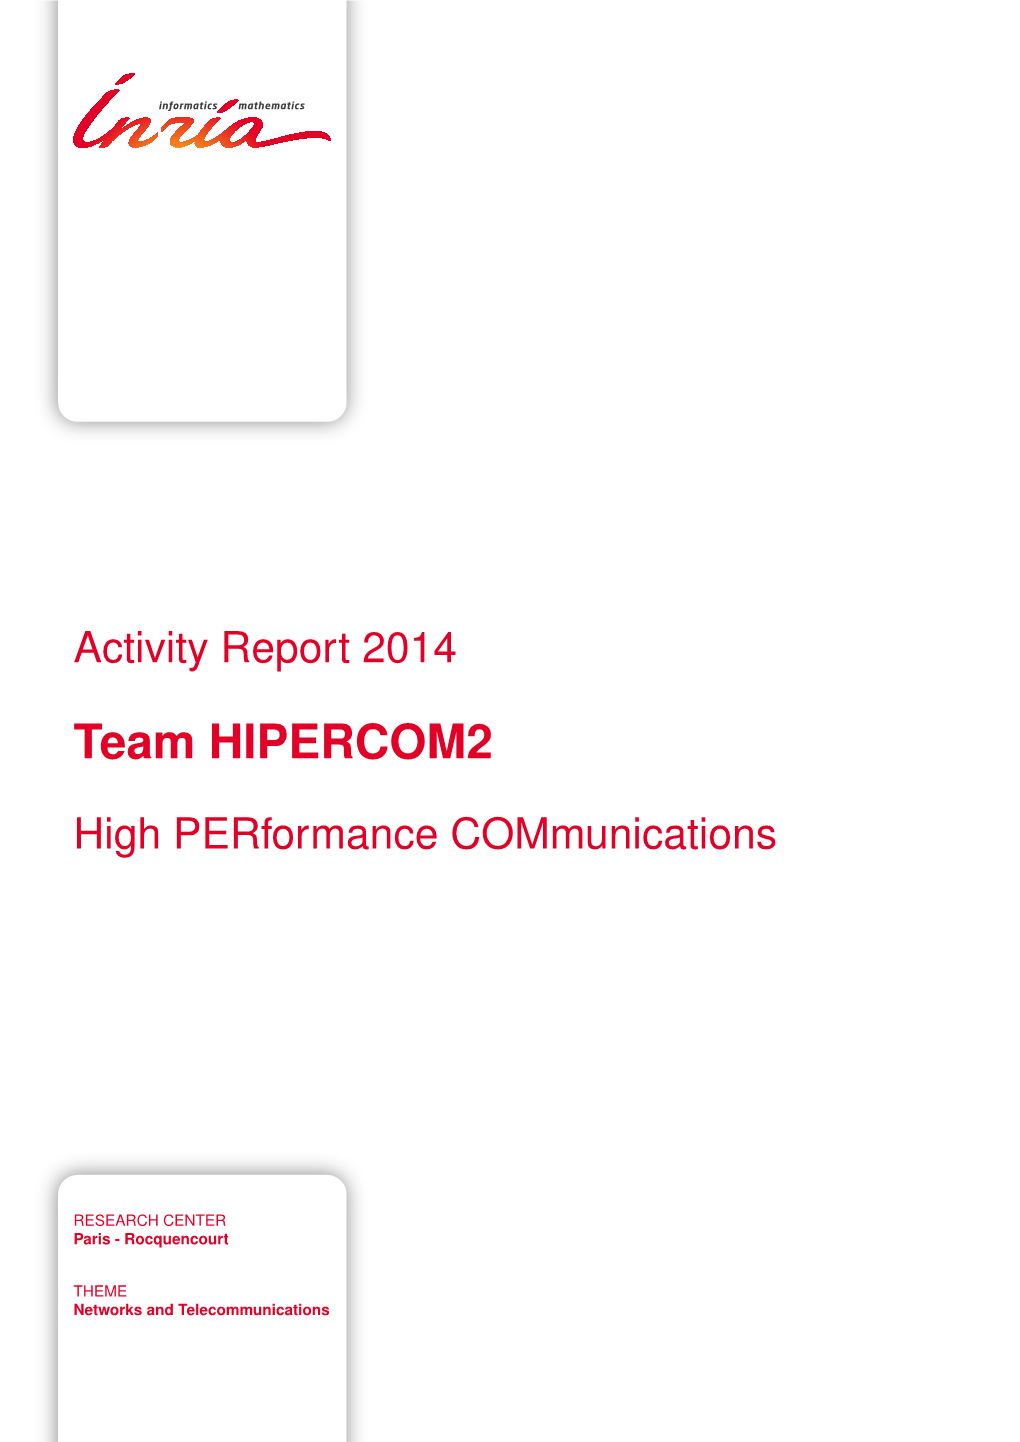 Team HIPERCOM2